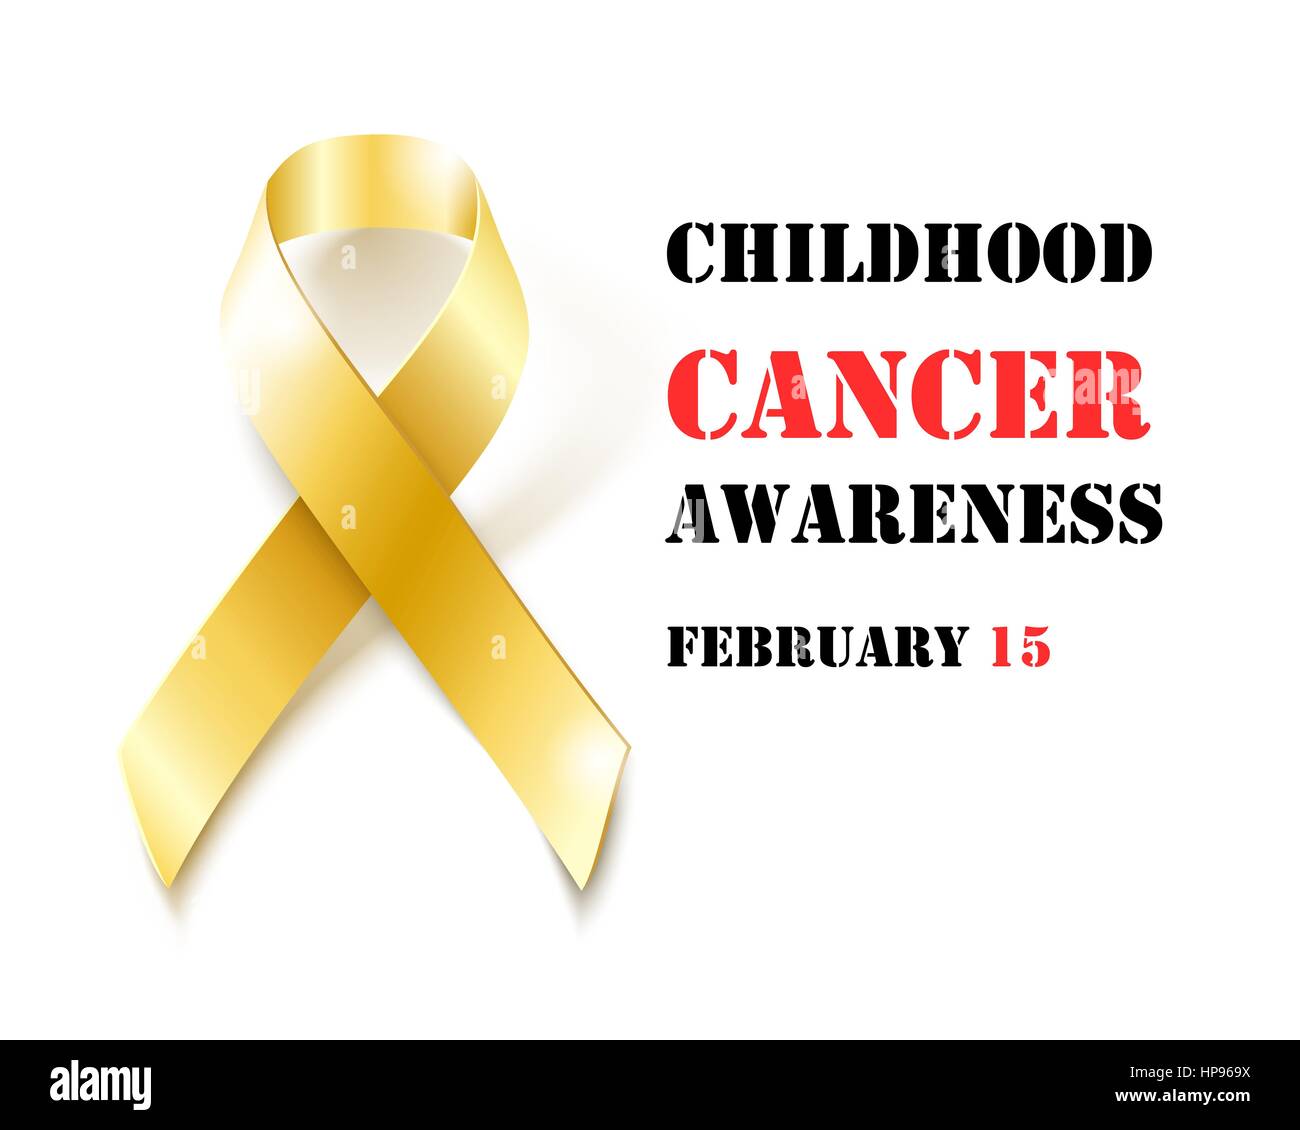 Kindheit Cancer Awareness Hintergrund mit Goldband, Vektor-illustration Stock Vektor